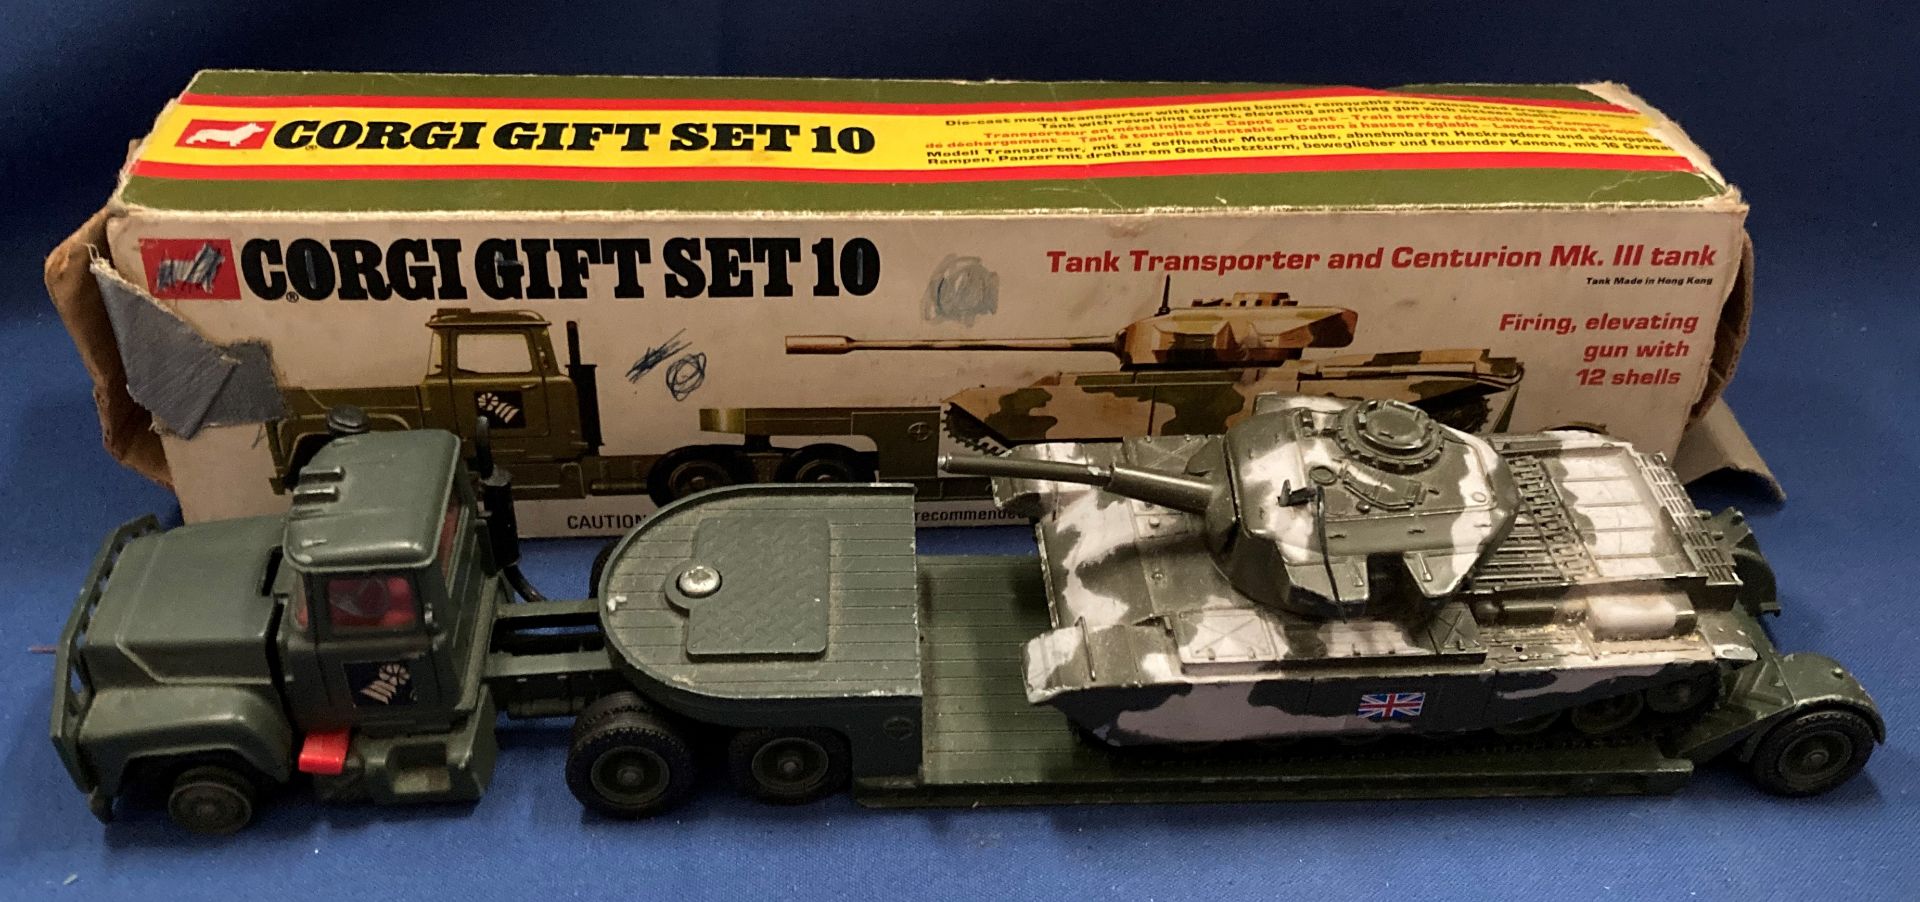 Corgi gift set 10 tank transporter and Centurion MKIII tank in box (box play worn) (S1 glass cab - Image 2 of 4